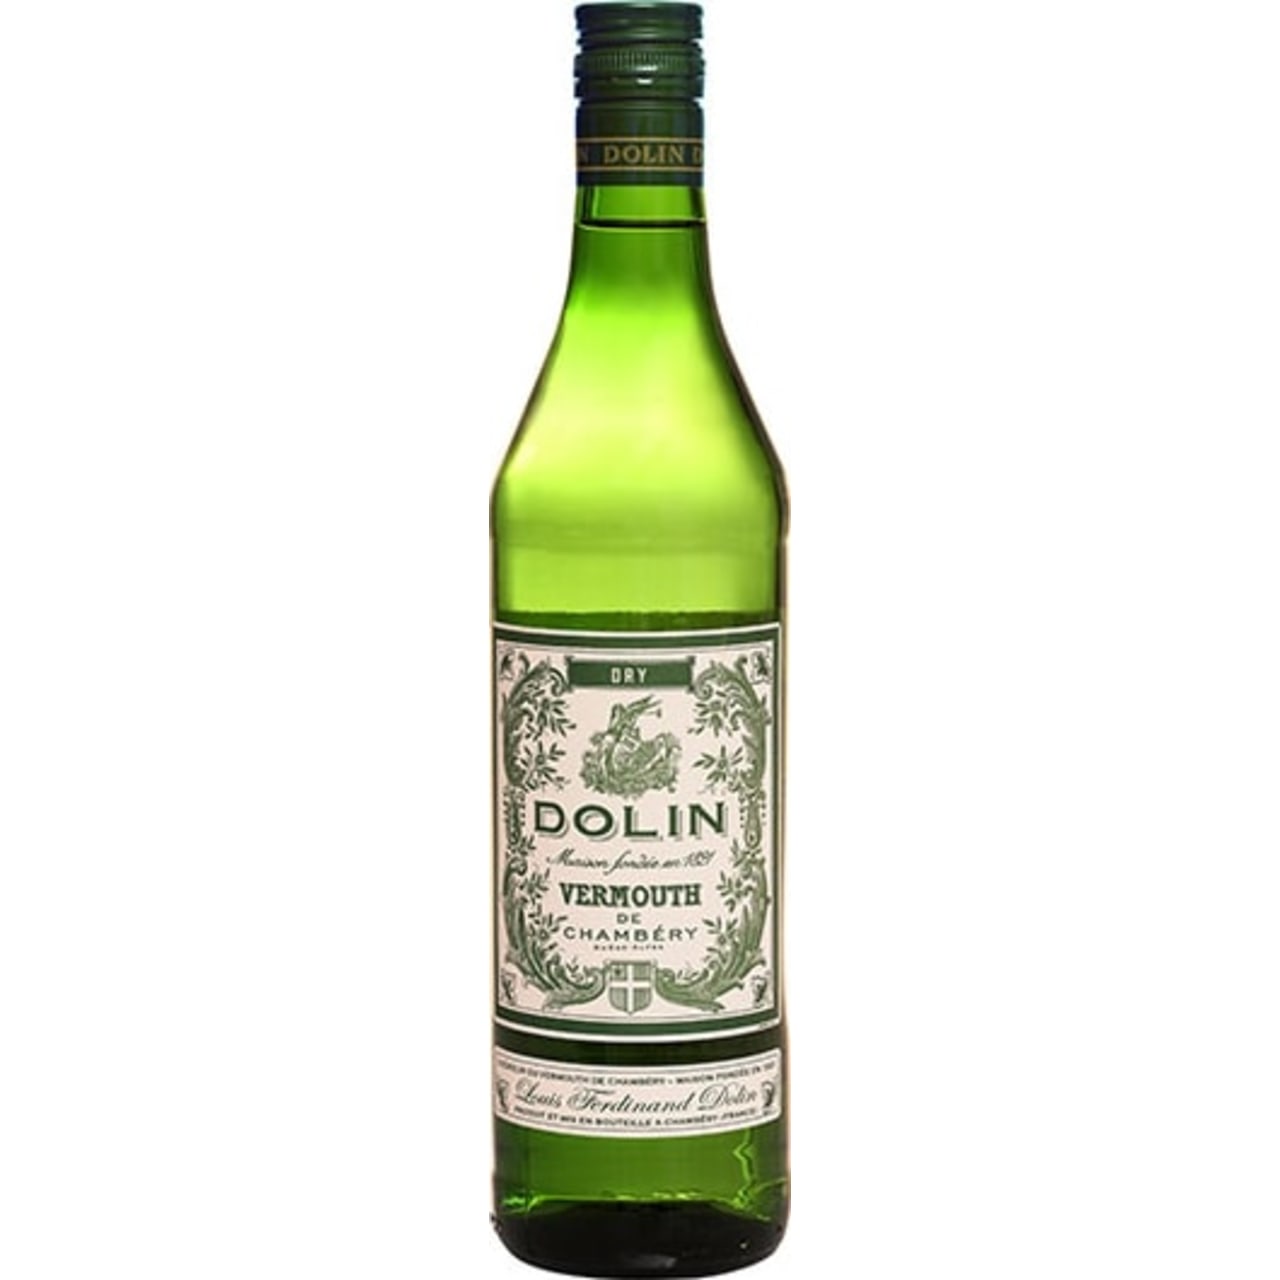 Dolin Chambery Dry Vermouth